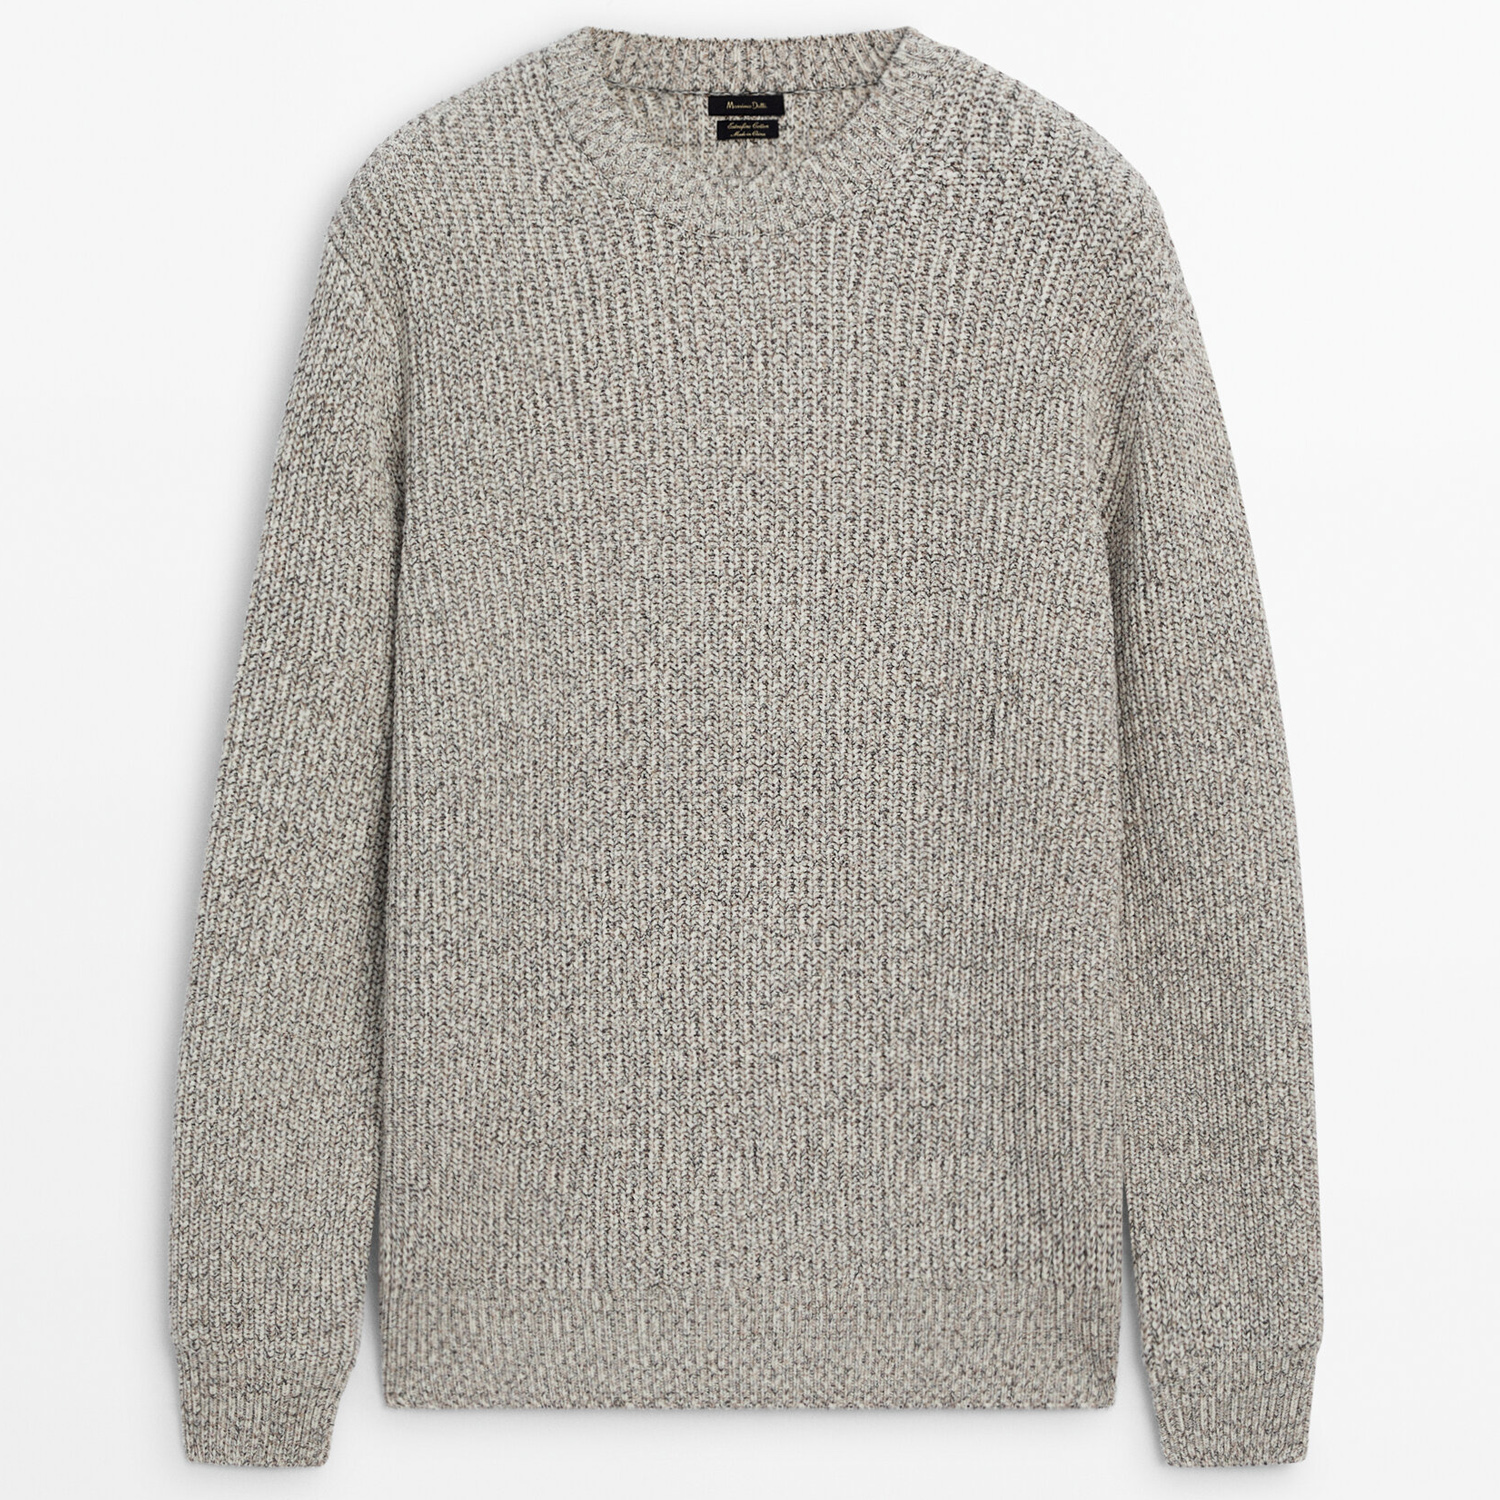 Свитер Massimo Dutti Cotton Blend Knit, кремовый свитер massimo dutti кремовый